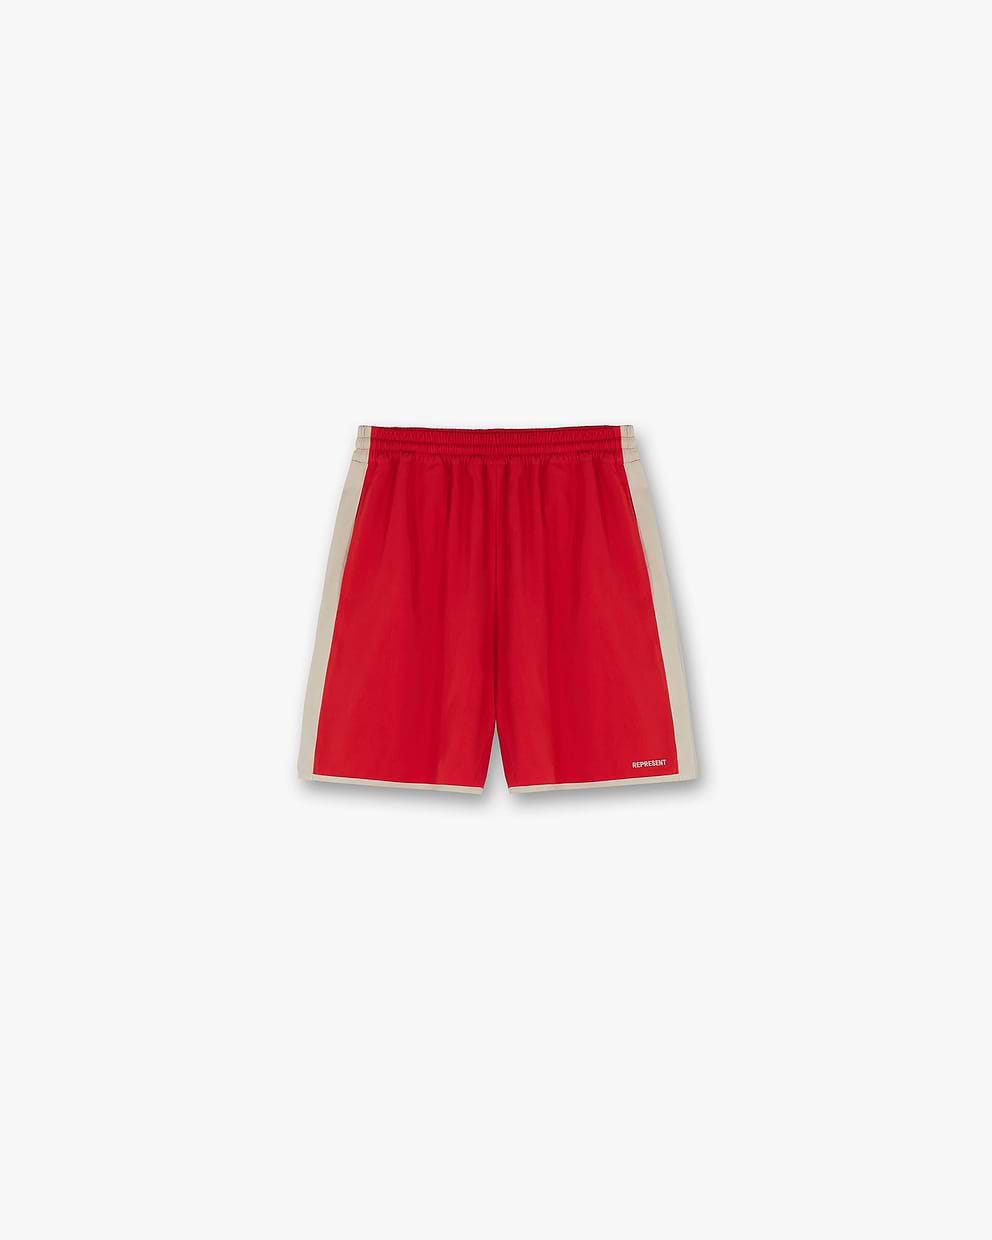 Souvenir Shorts - Burnt Red